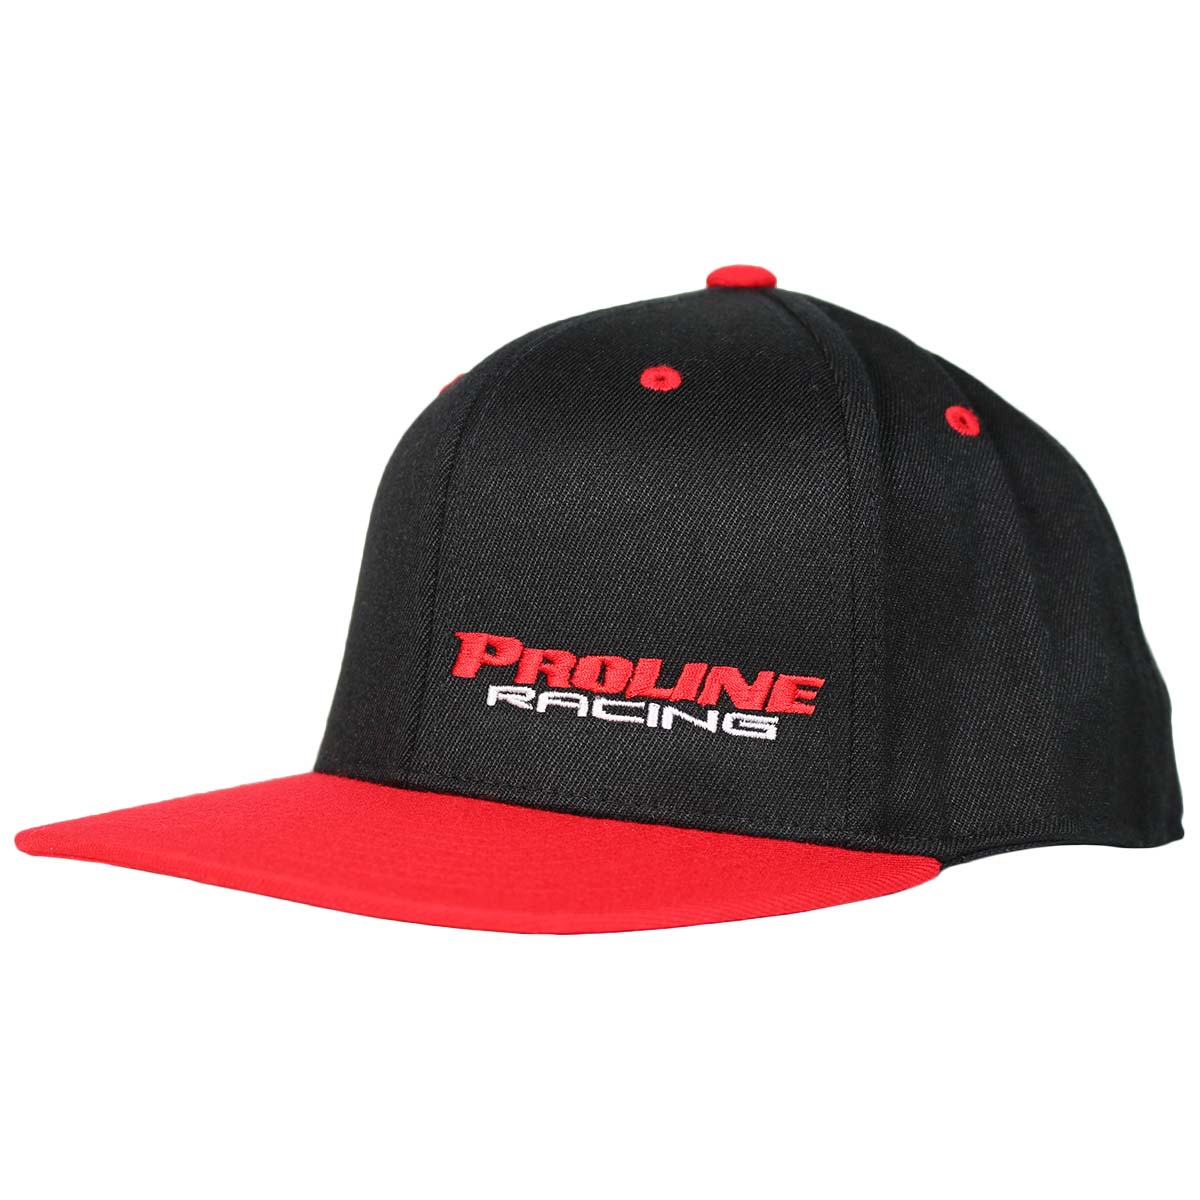 PLR FLEXFIT 110 SNAPBACK Pro Line Racing HAT 